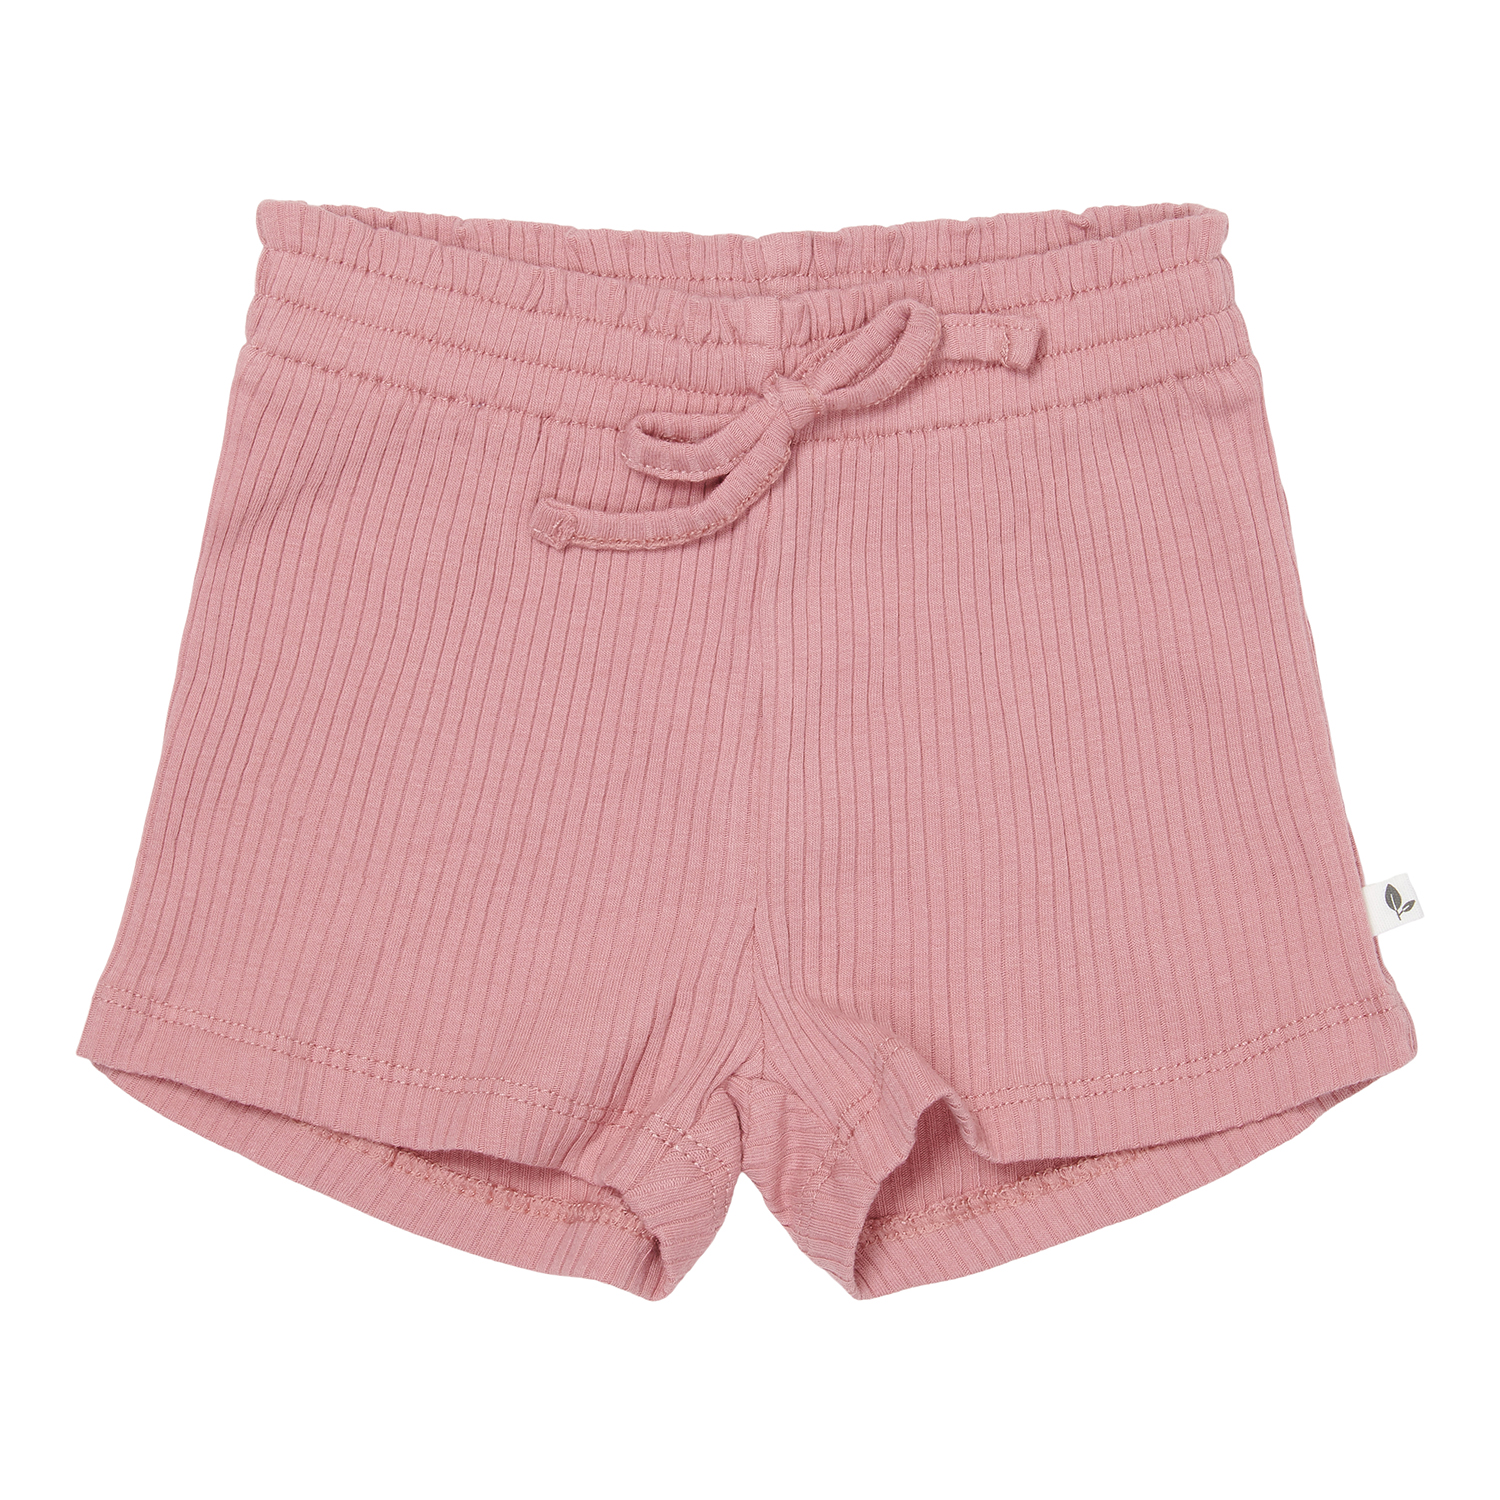 Kurze Hose / Shorts Rippe vintage pink (Gr. 74)